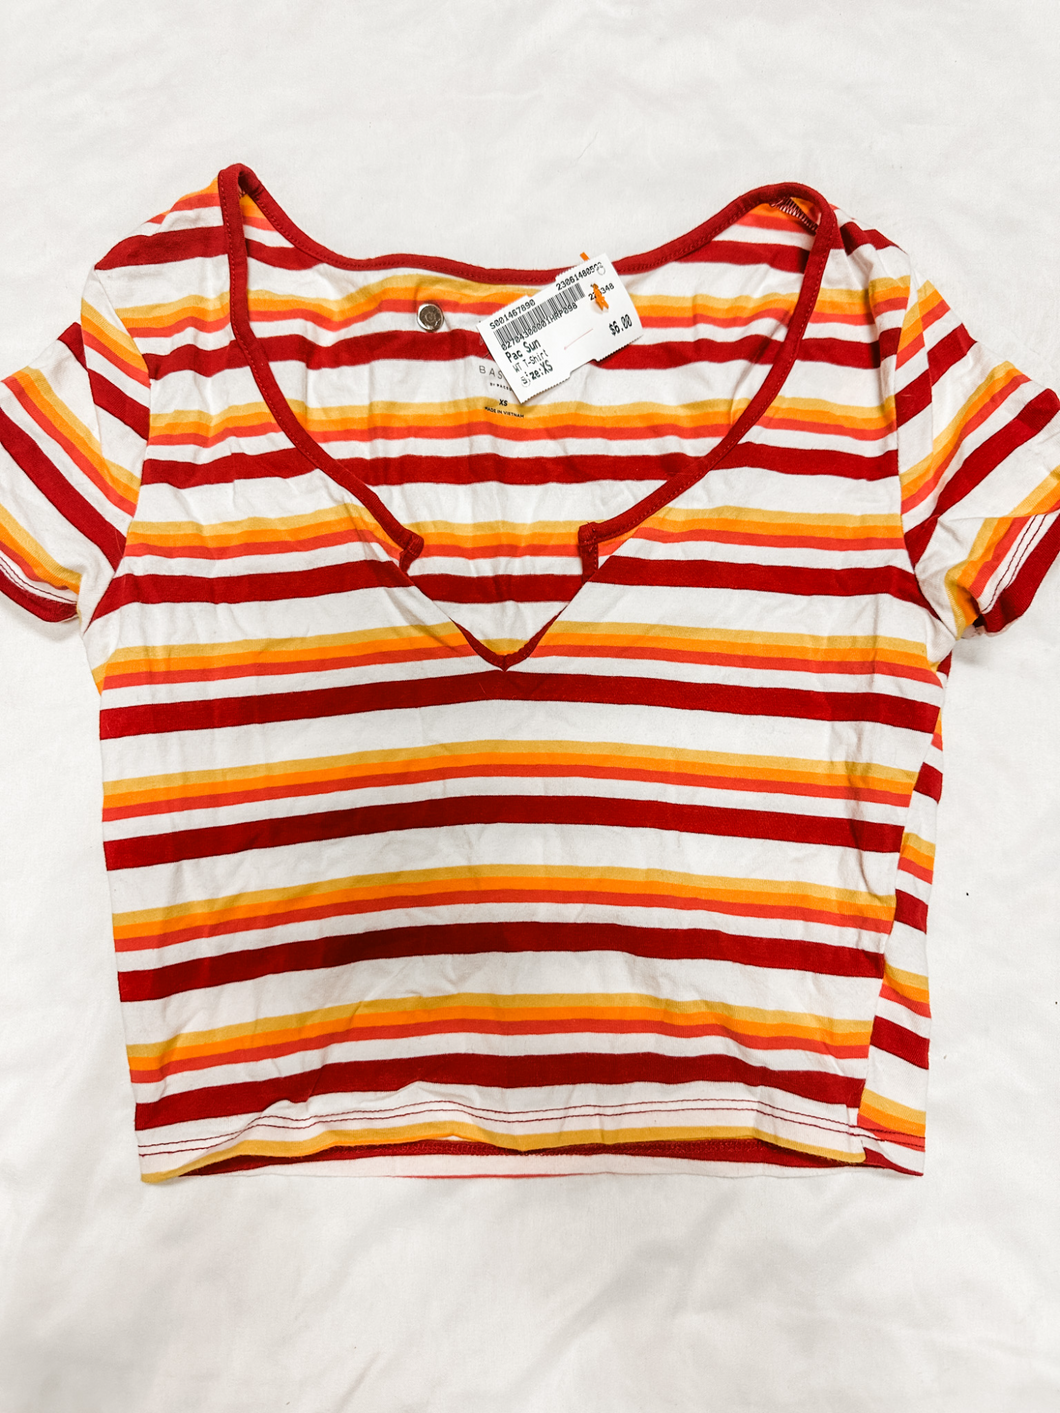 Pac Sun T-Shirt Size Extra Small * - Plato's Closet Morgantown, WV